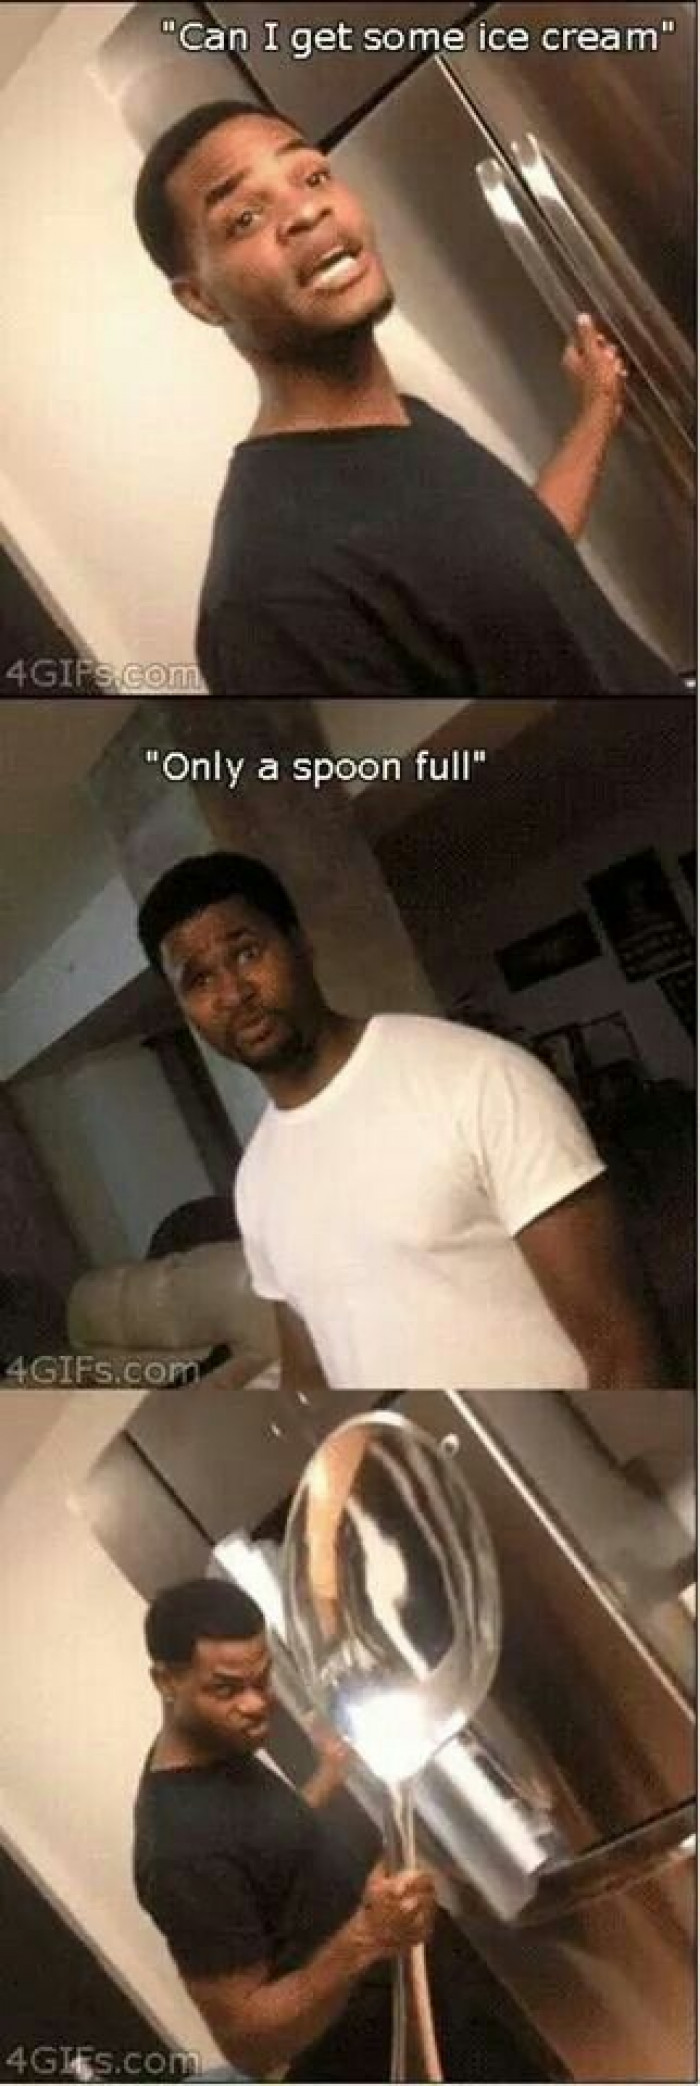 spoon "fool"